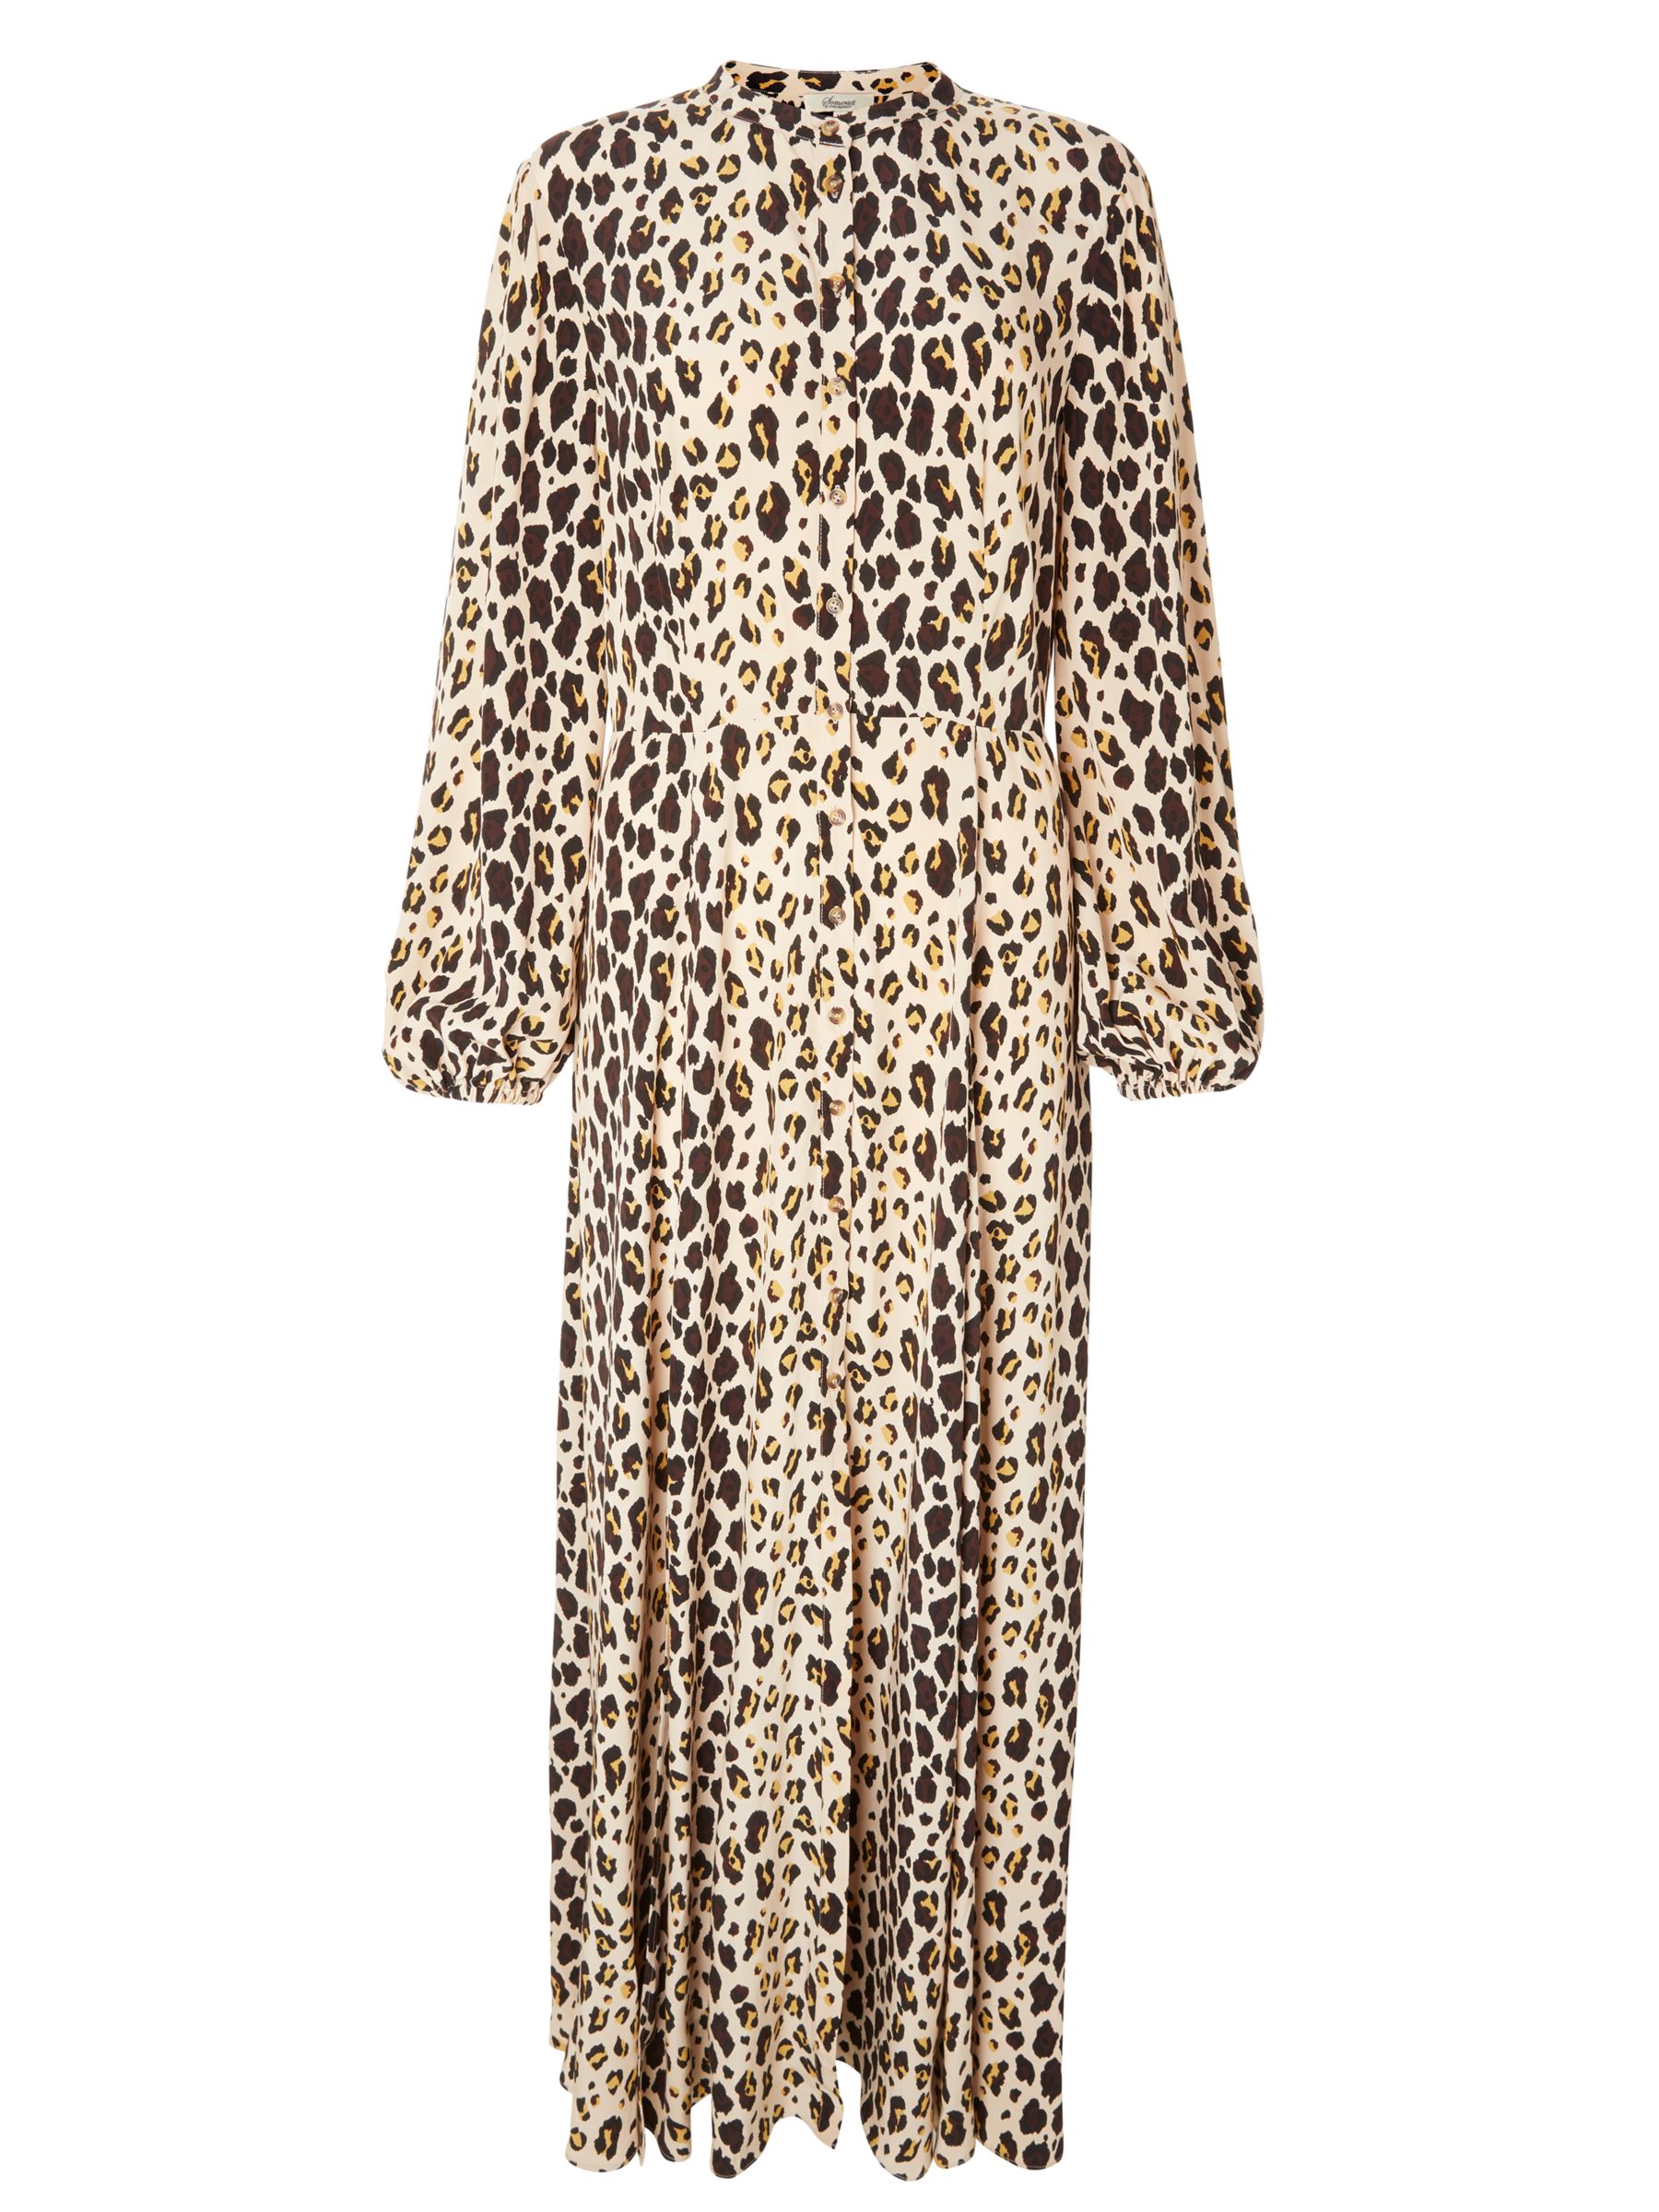 Somerset by Alice Temperley Leopard Print Maxi Dress, Multi